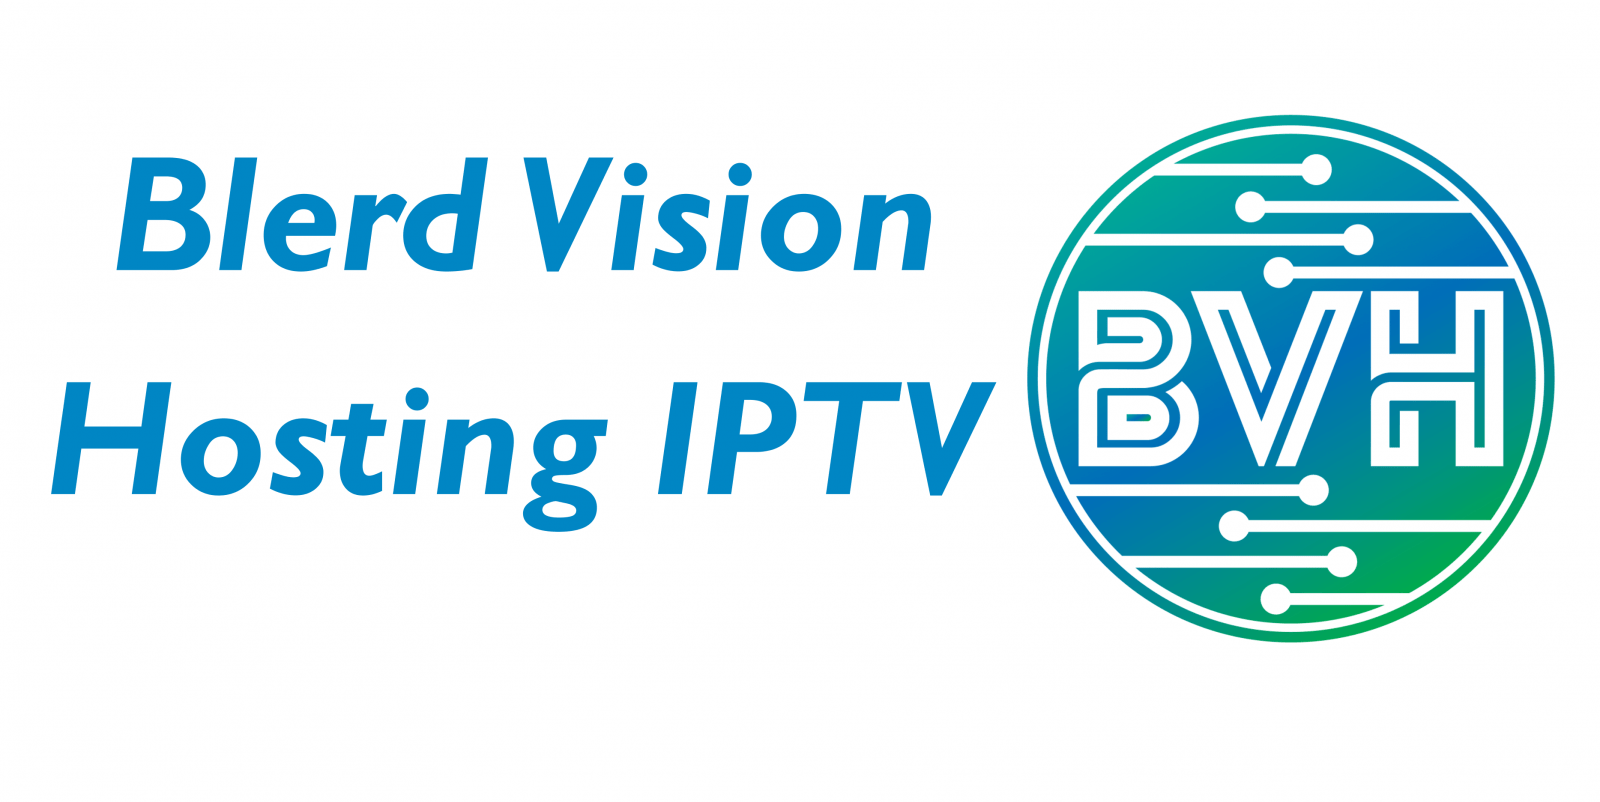 Blerd Vision Hosting IPTV:  Features, Price, Setup